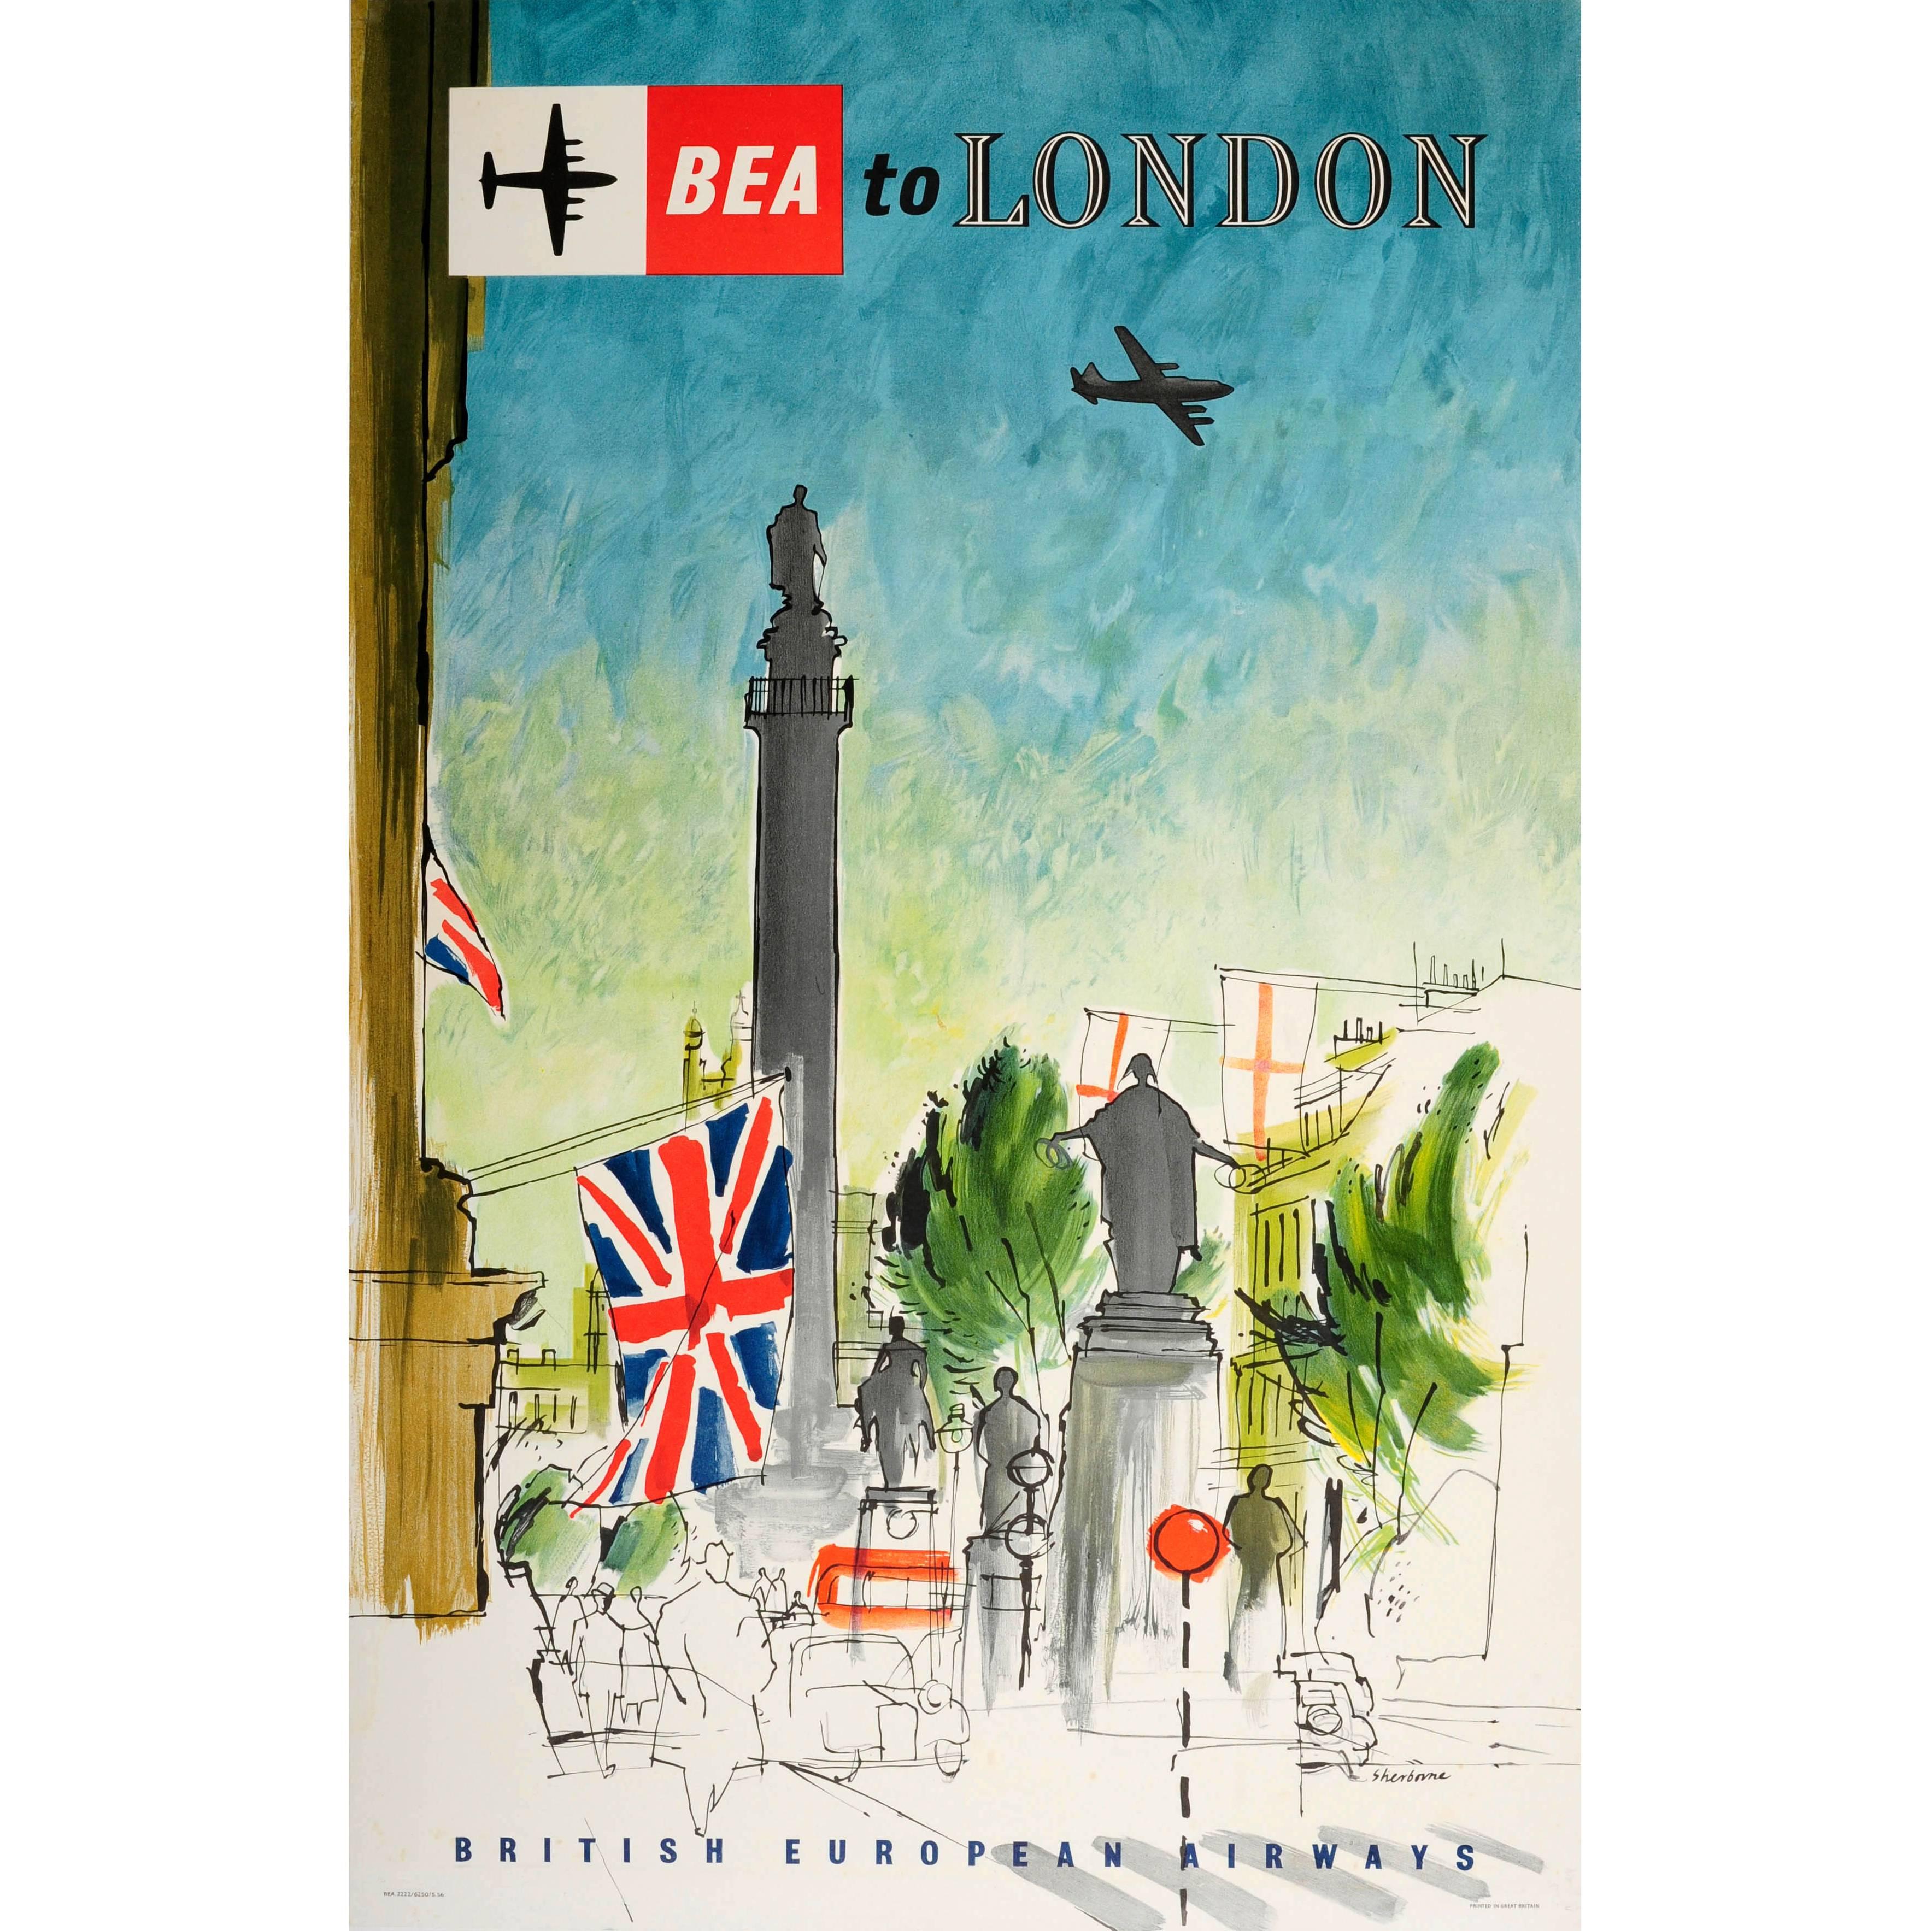 Original Vintage British European Airways Travel Poster - Fly BEA To London